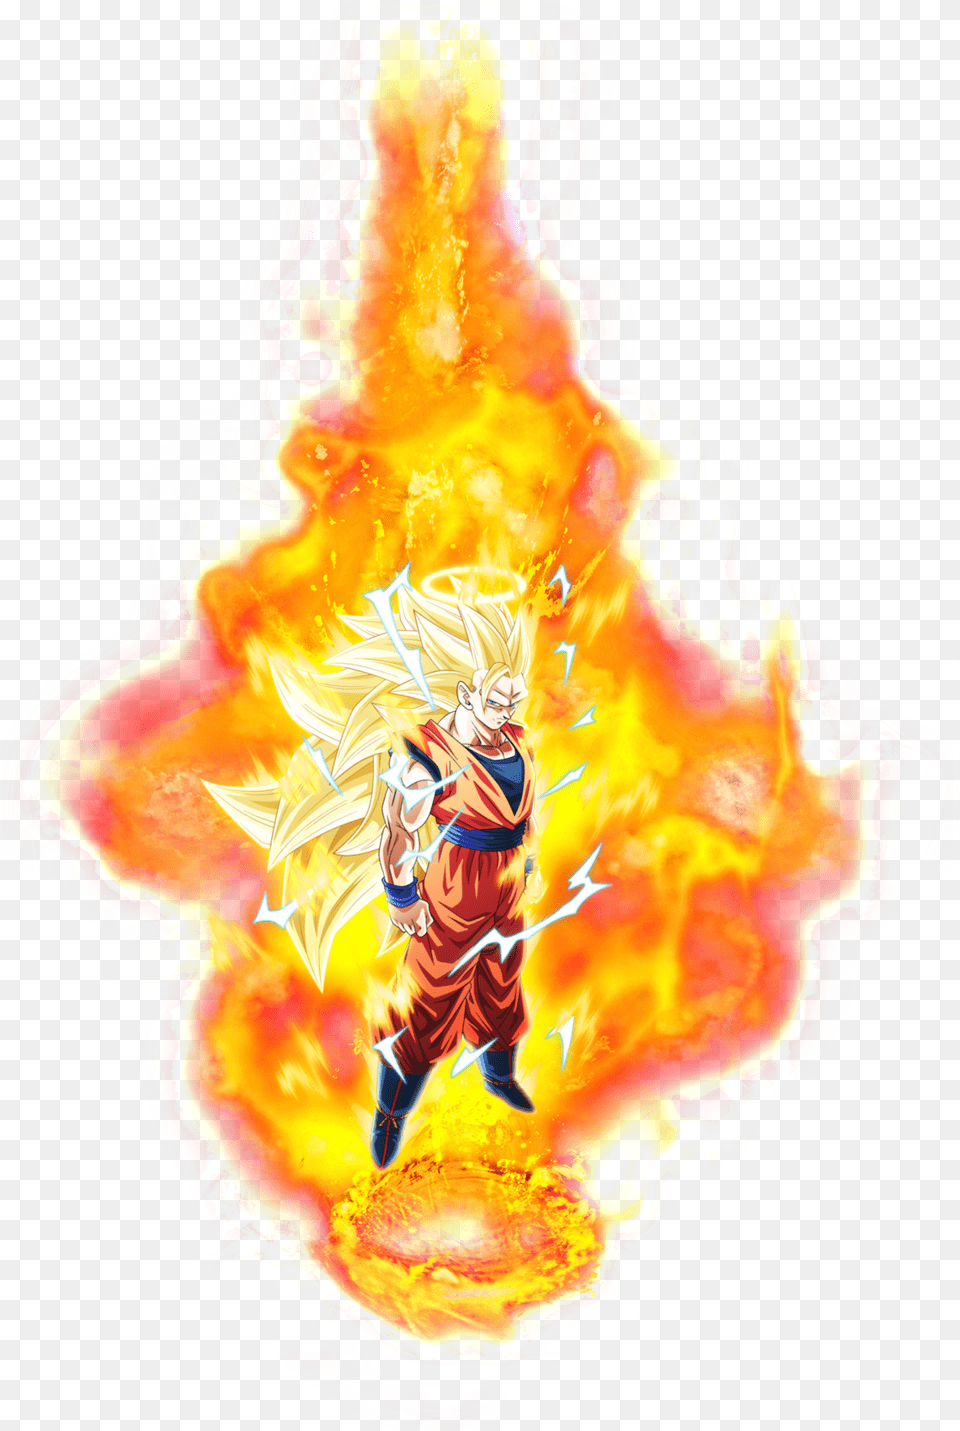 Goku Download Dbz Aura Transparent, Flame, Fire, Person, Face Png Image